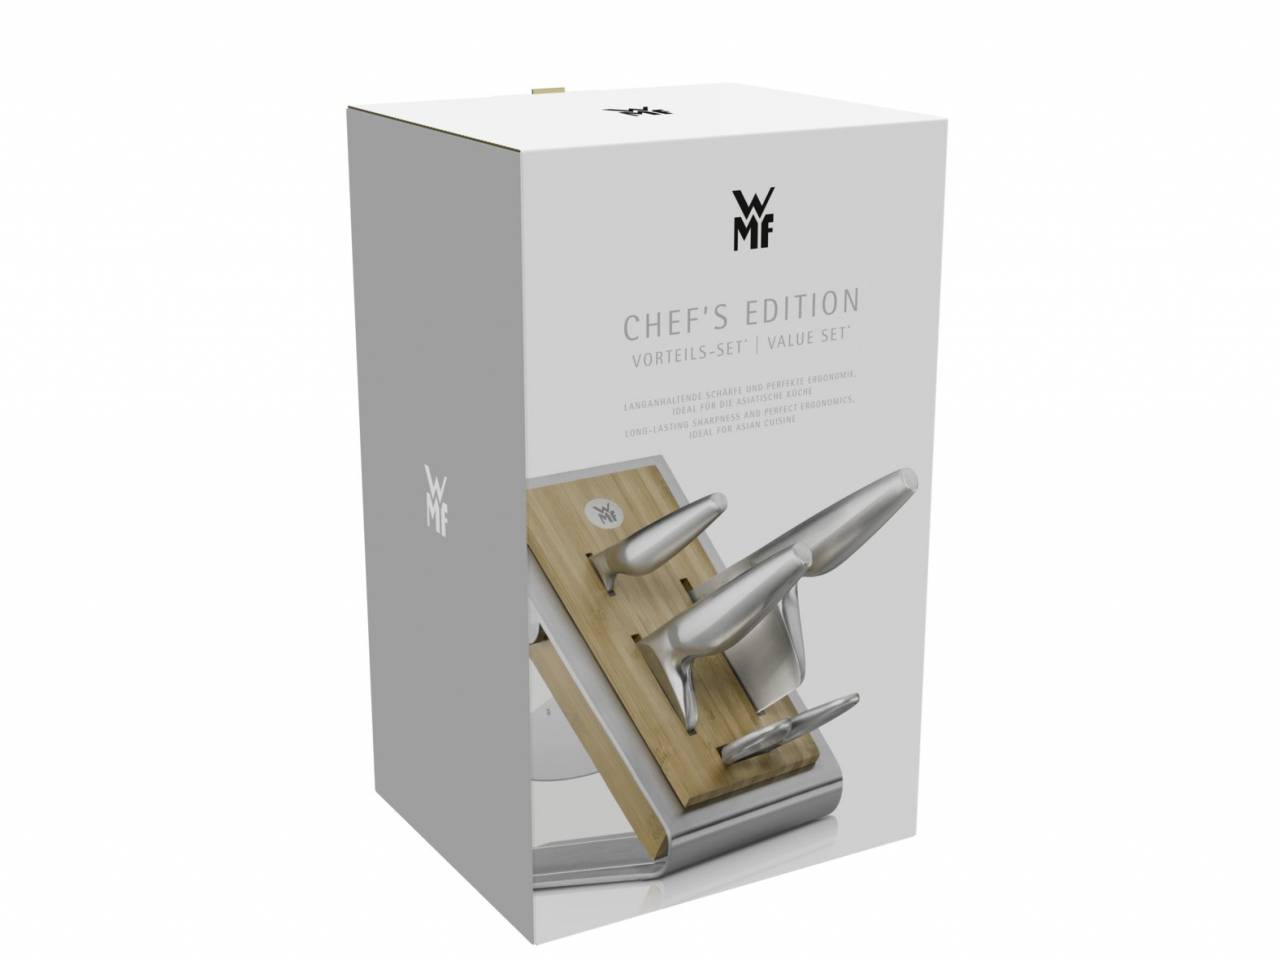 chef-s-edition-asia-keskeszlet-blokkal-5-db-www.wmf.hu-11.jpg